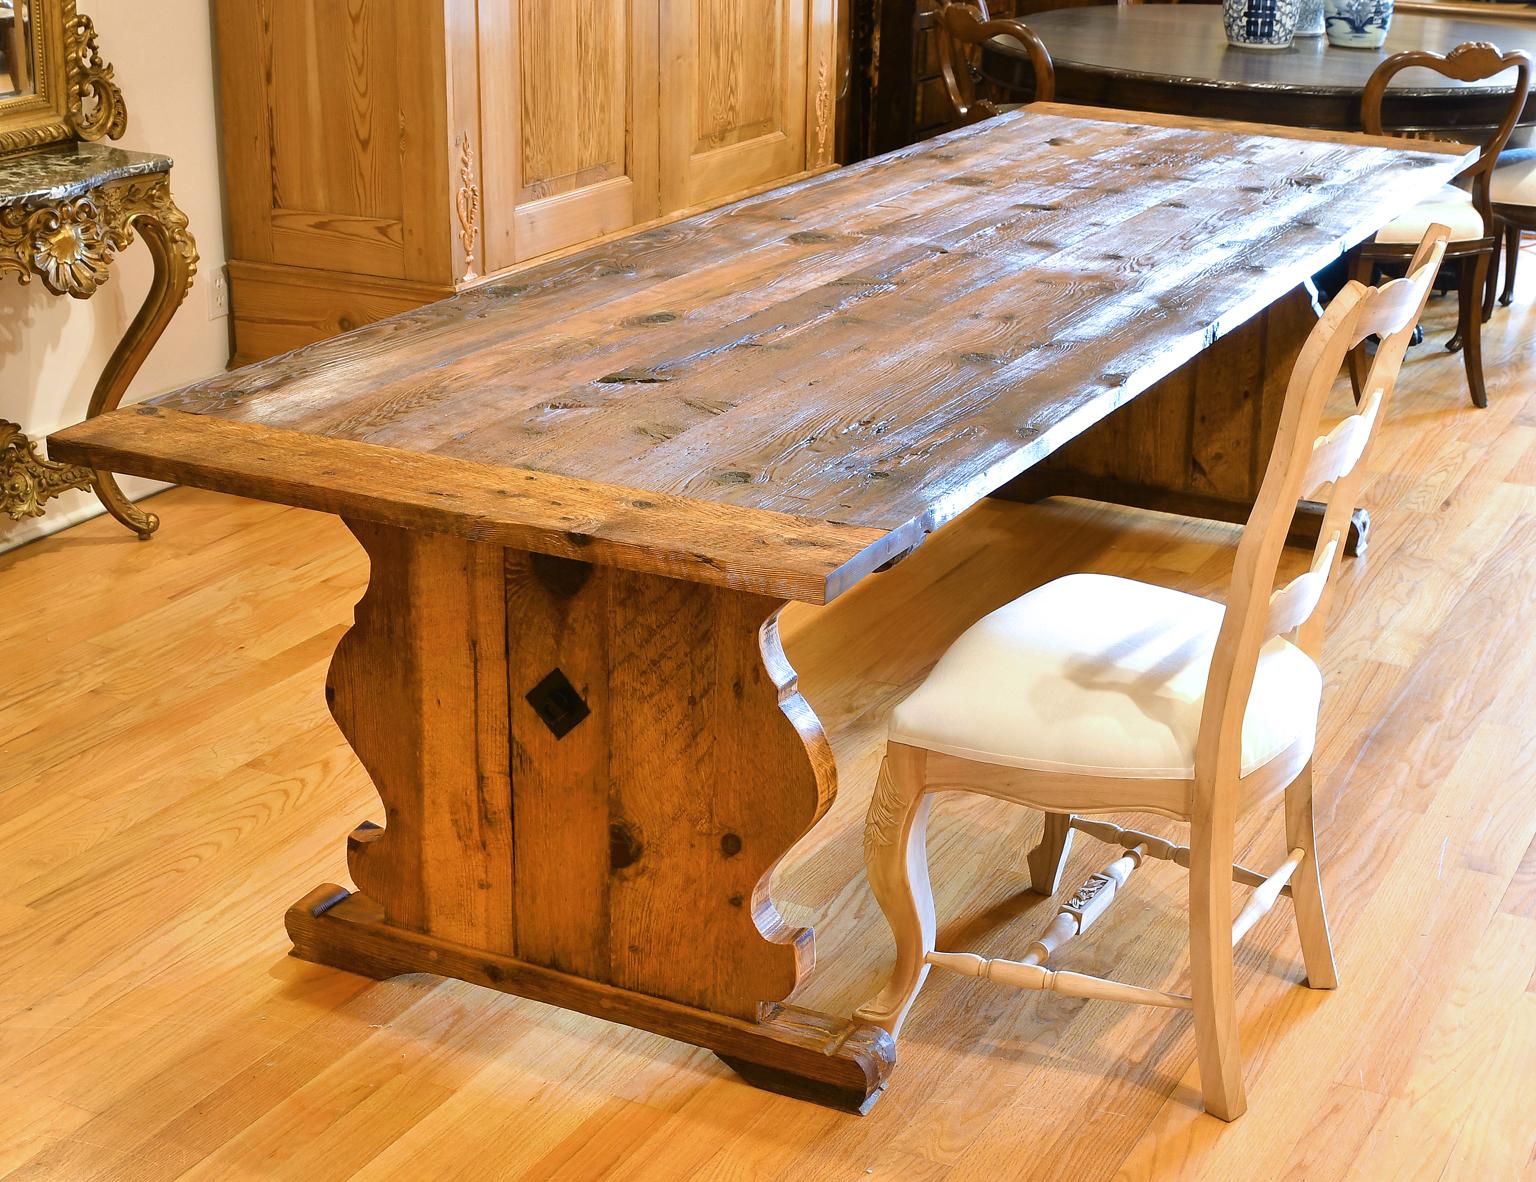 Gustavian 10' long Swedish Farm Table Made From Repurposed Douglas Fir & Ponderosa Pine For Sale